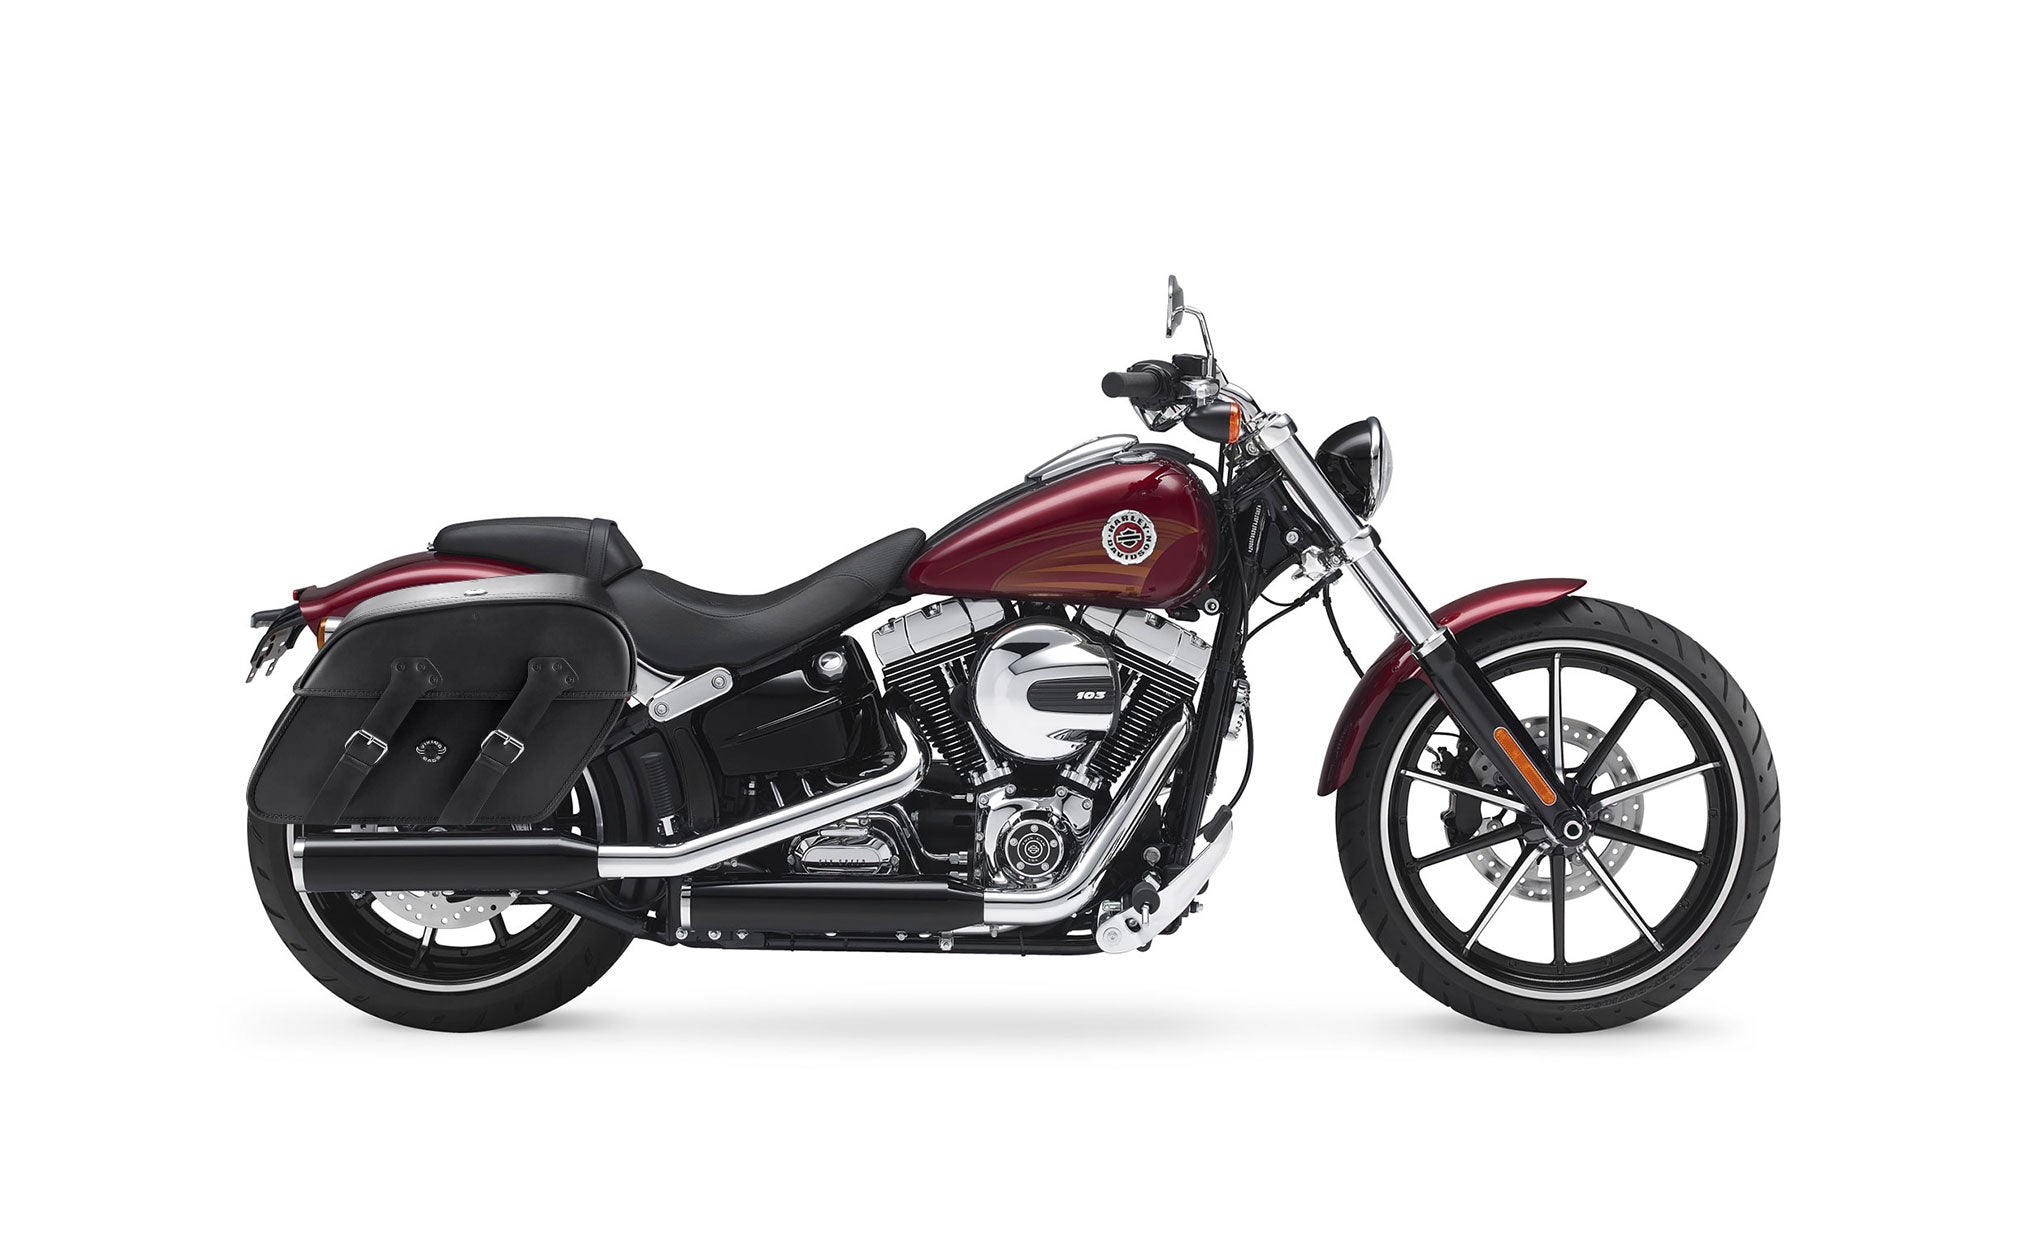 Viking Raven Extra Large Leather Motorcycle Saddlebags For Harley Softail Breakout Fxsb on Bike Photo @expand